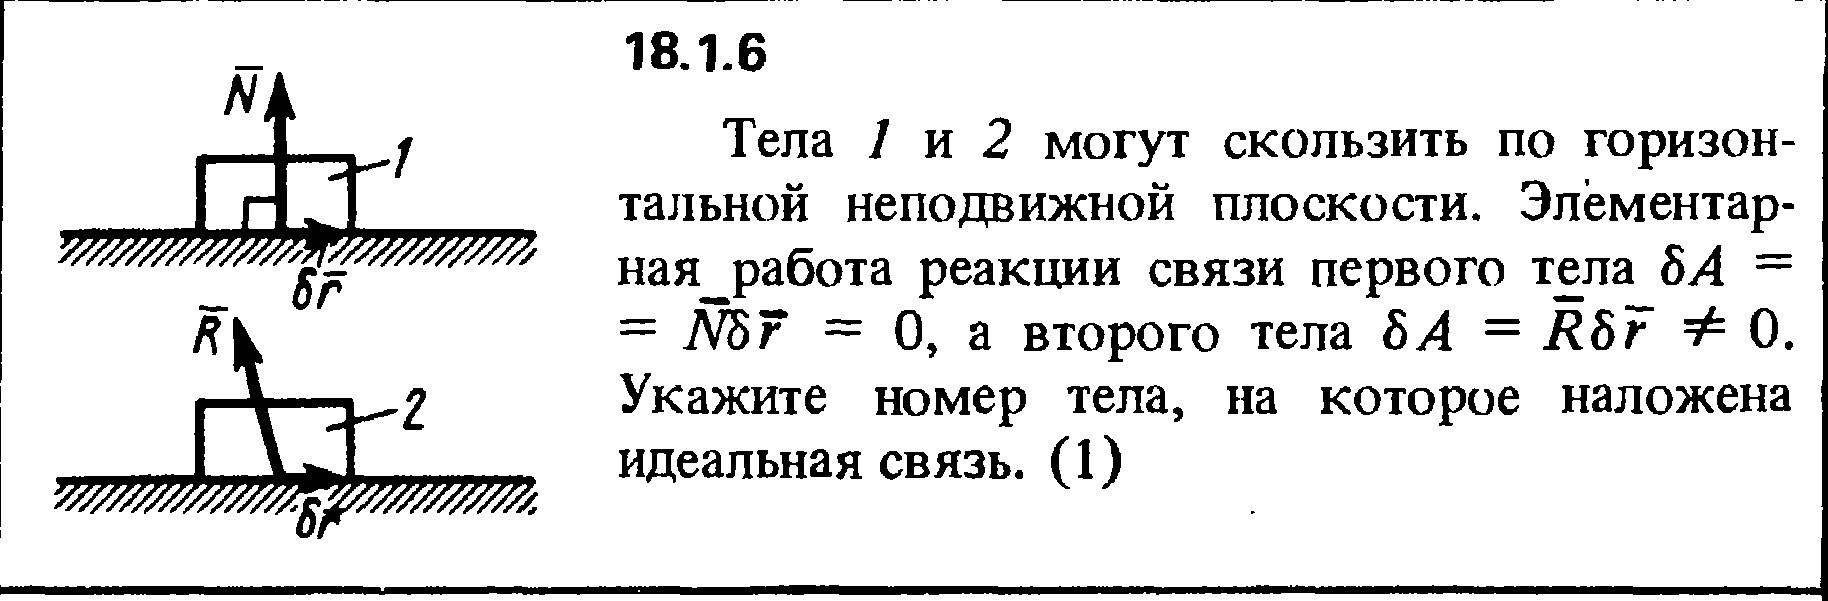 Решение 18.1.6 из сборника (решебника) Кепе О.Е. 1989